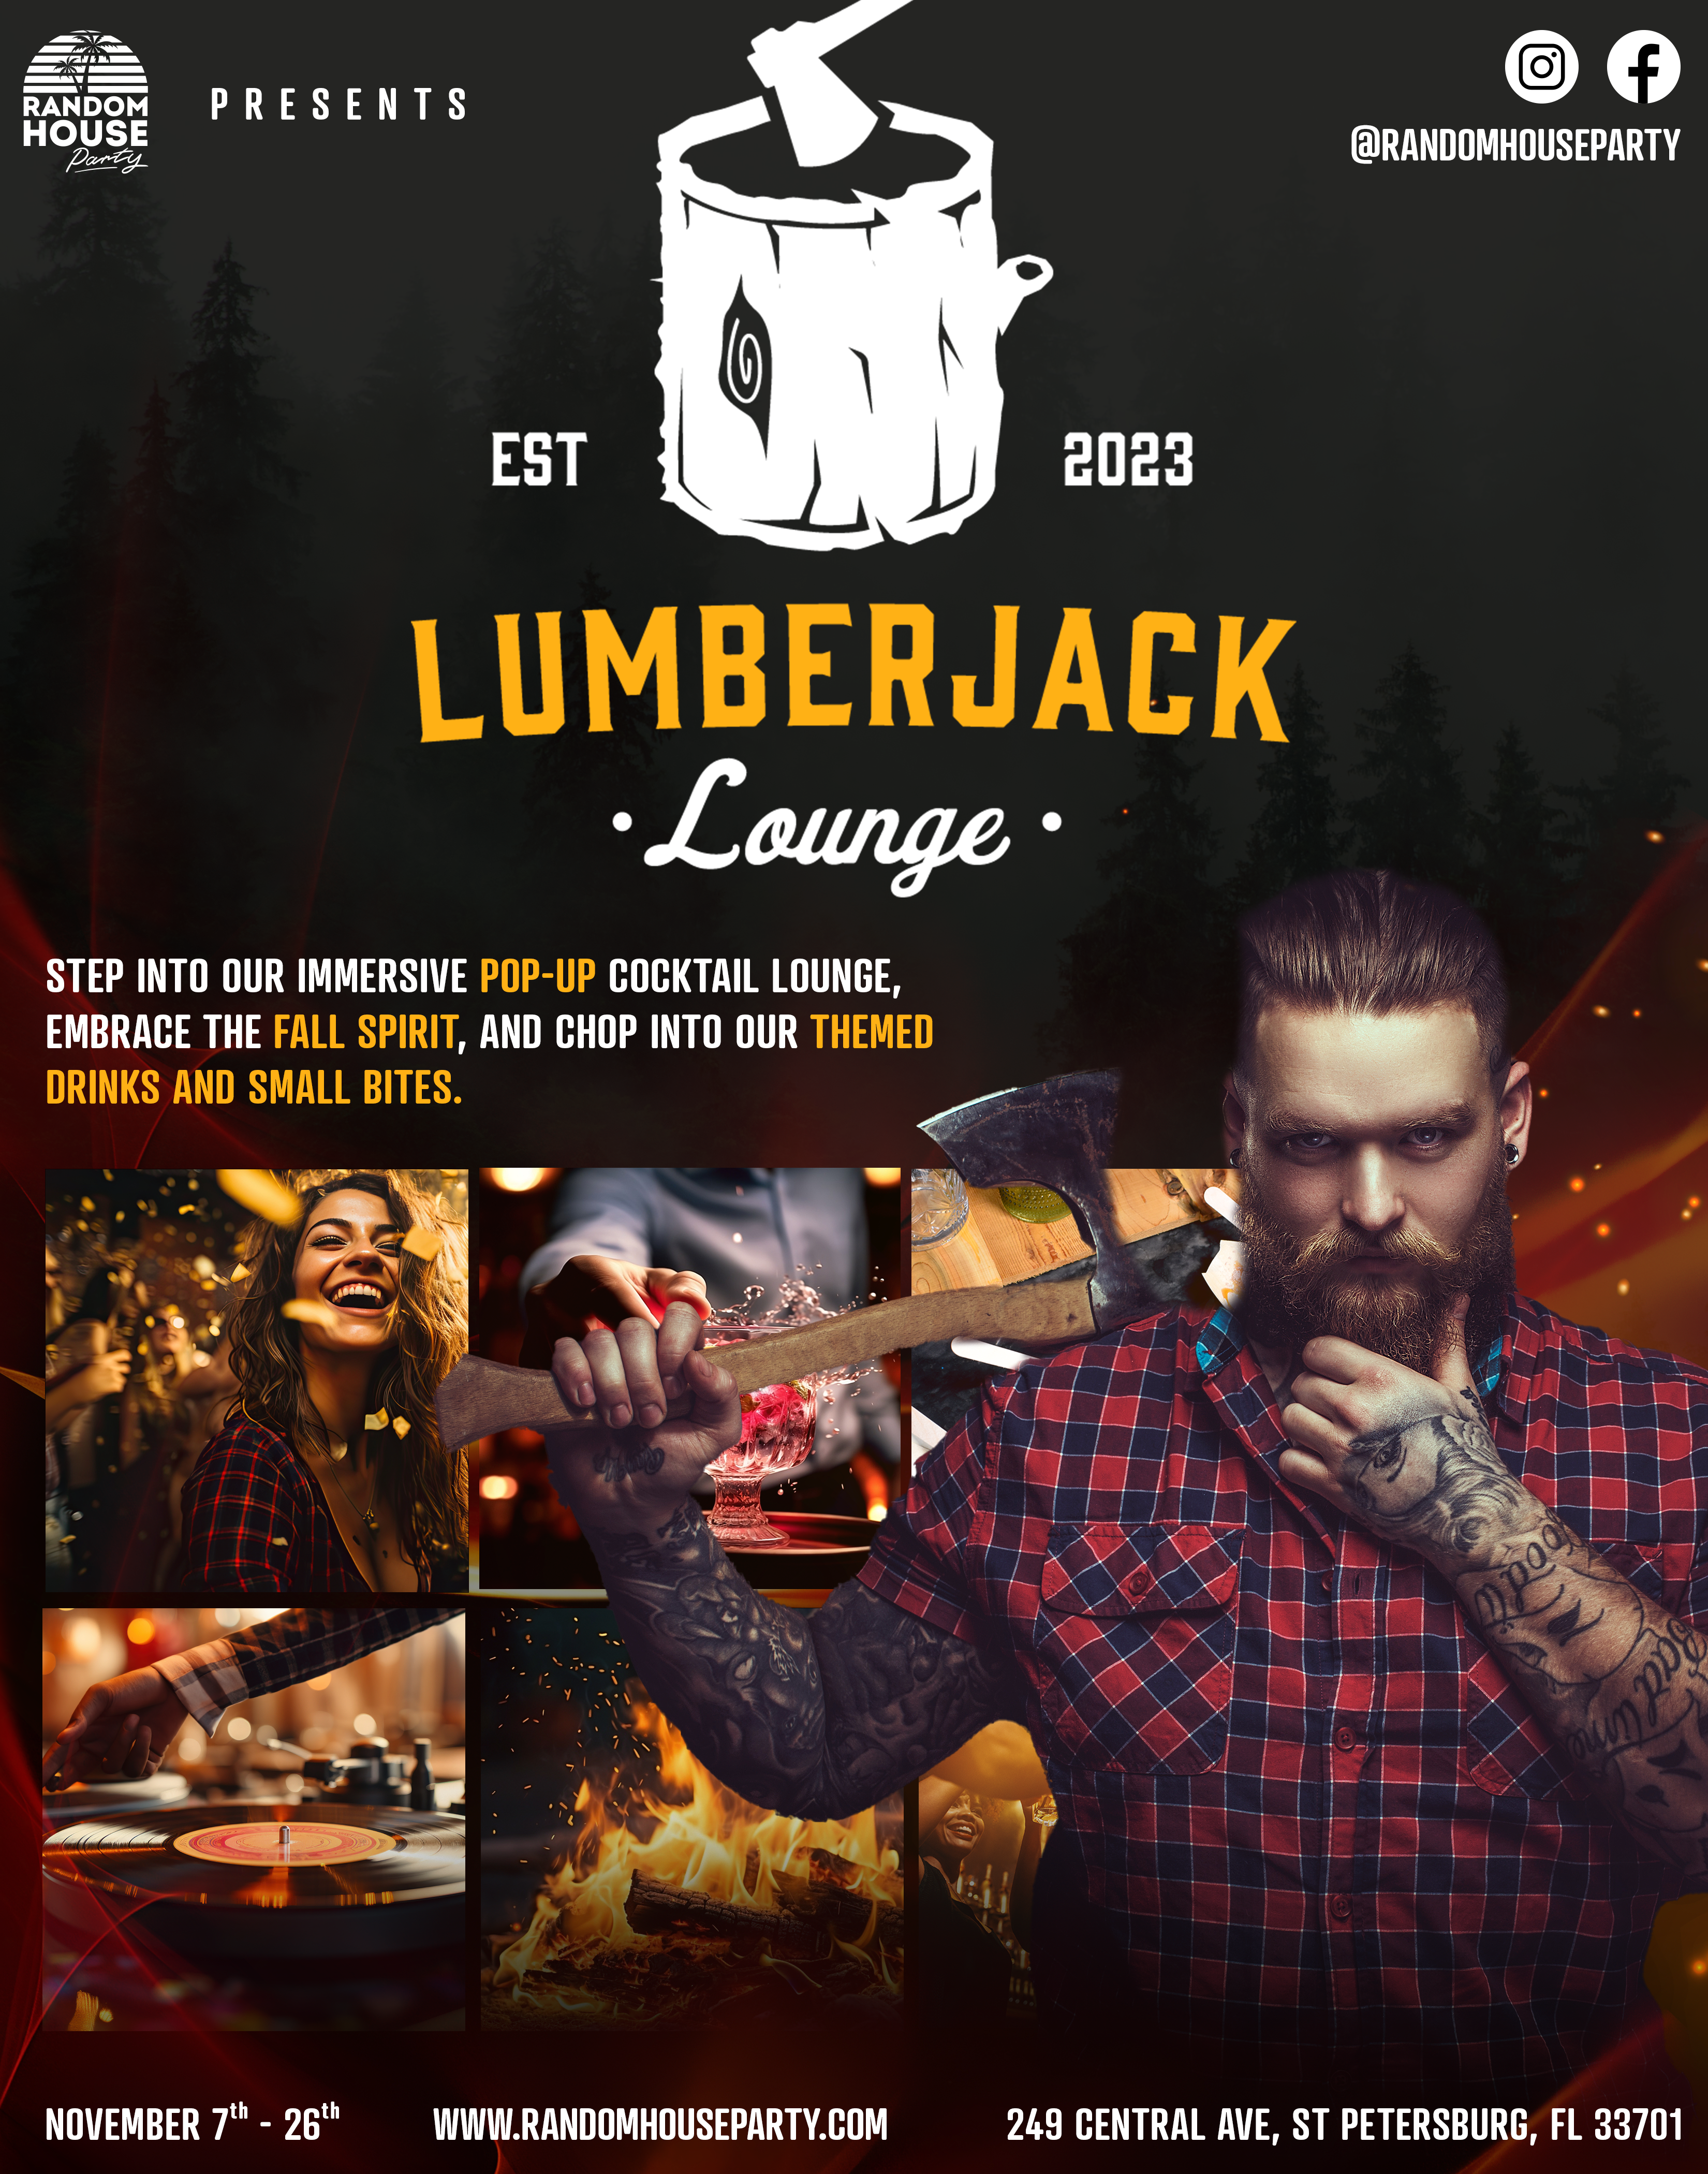 Lumberjack Lounge Opens Doors to Public November 8th